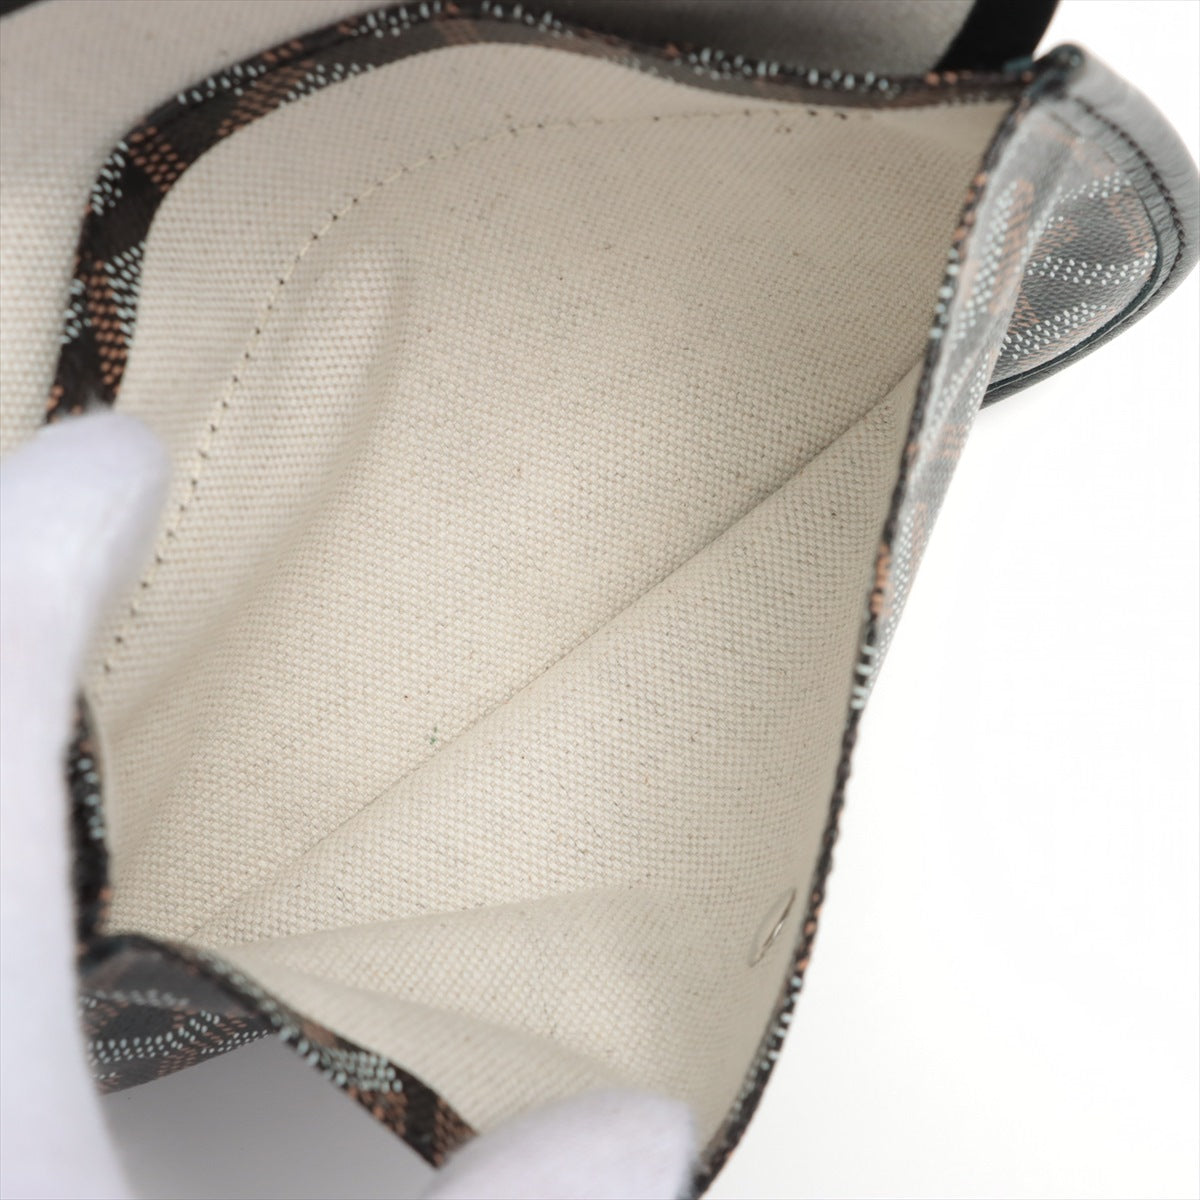 Goyard Goyardine Black St. Louis PM Tote Bag Palladium Hardware – Madison  Avenue Couture